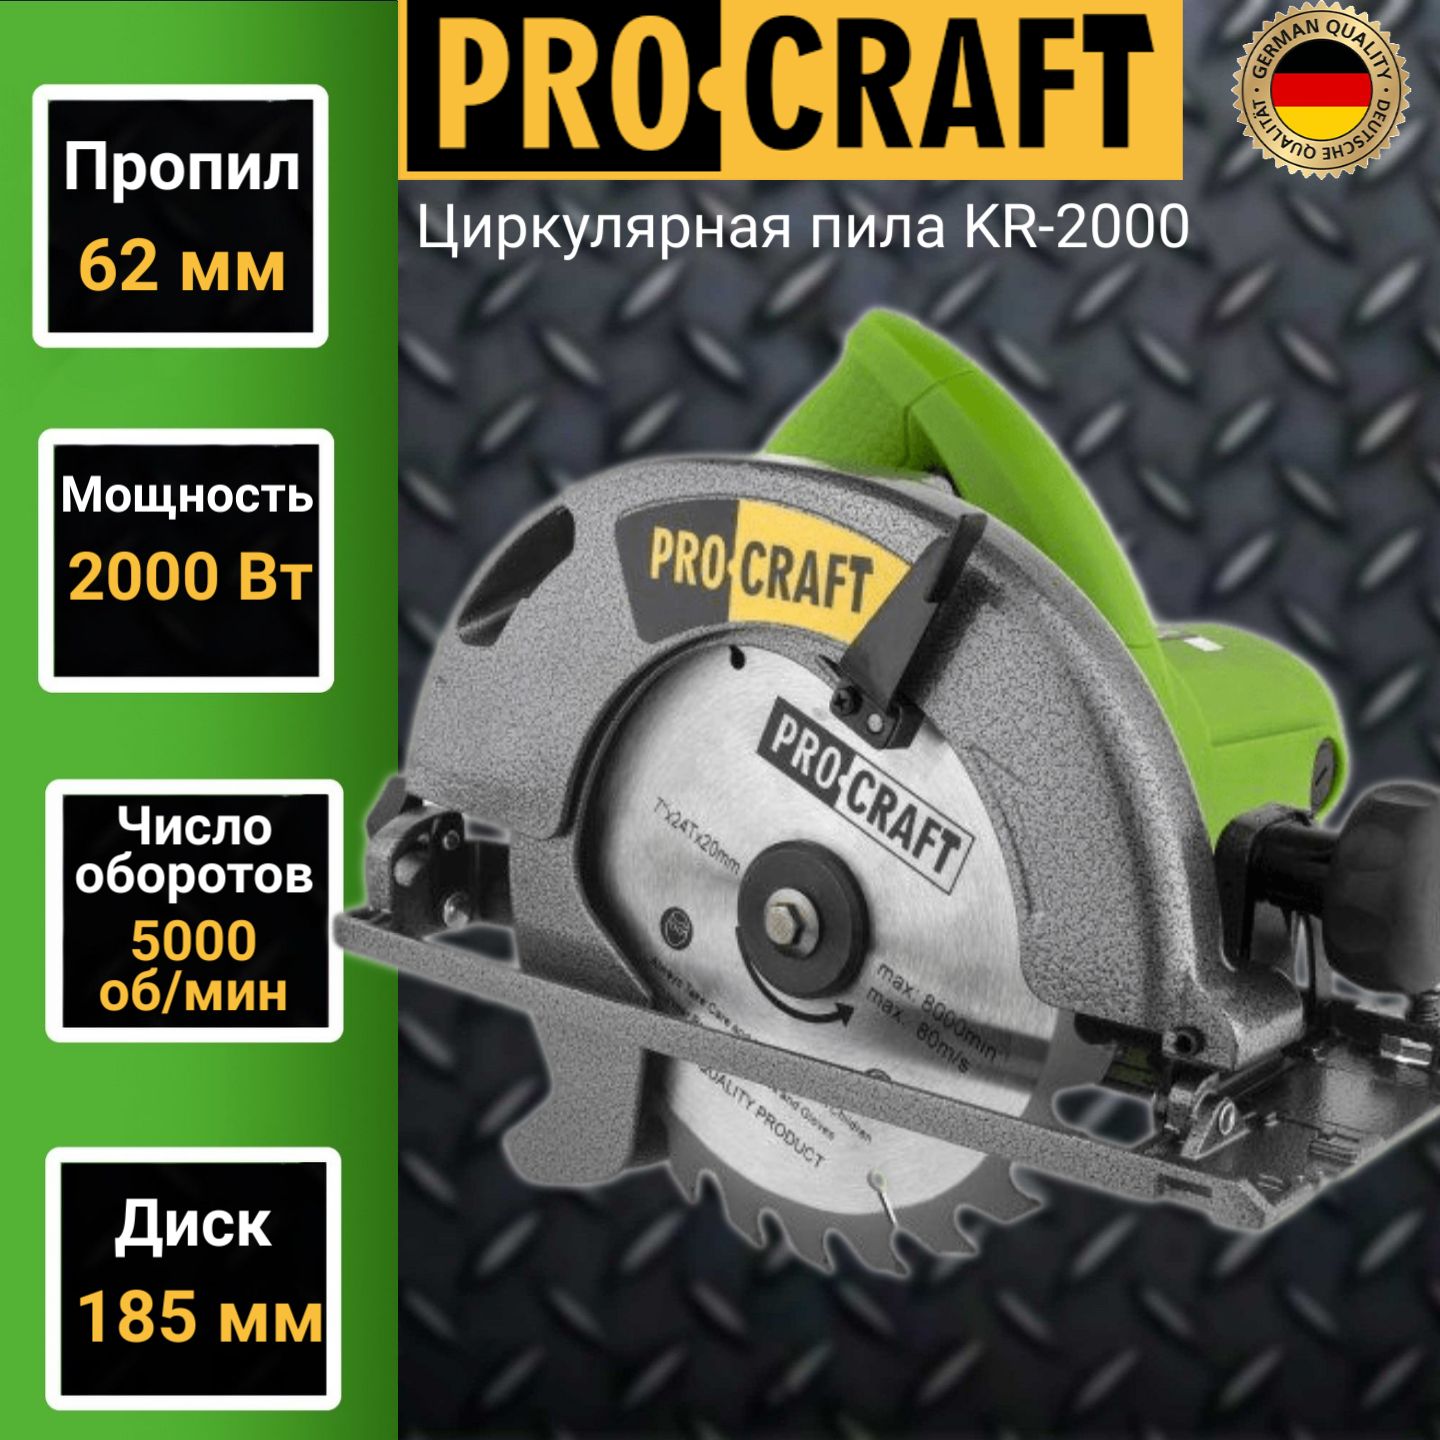 Циркулярная дисковая пила ProCraft KR-2000 диск 185мм, пропил 62мм, 5000об/мин, 2000Вт